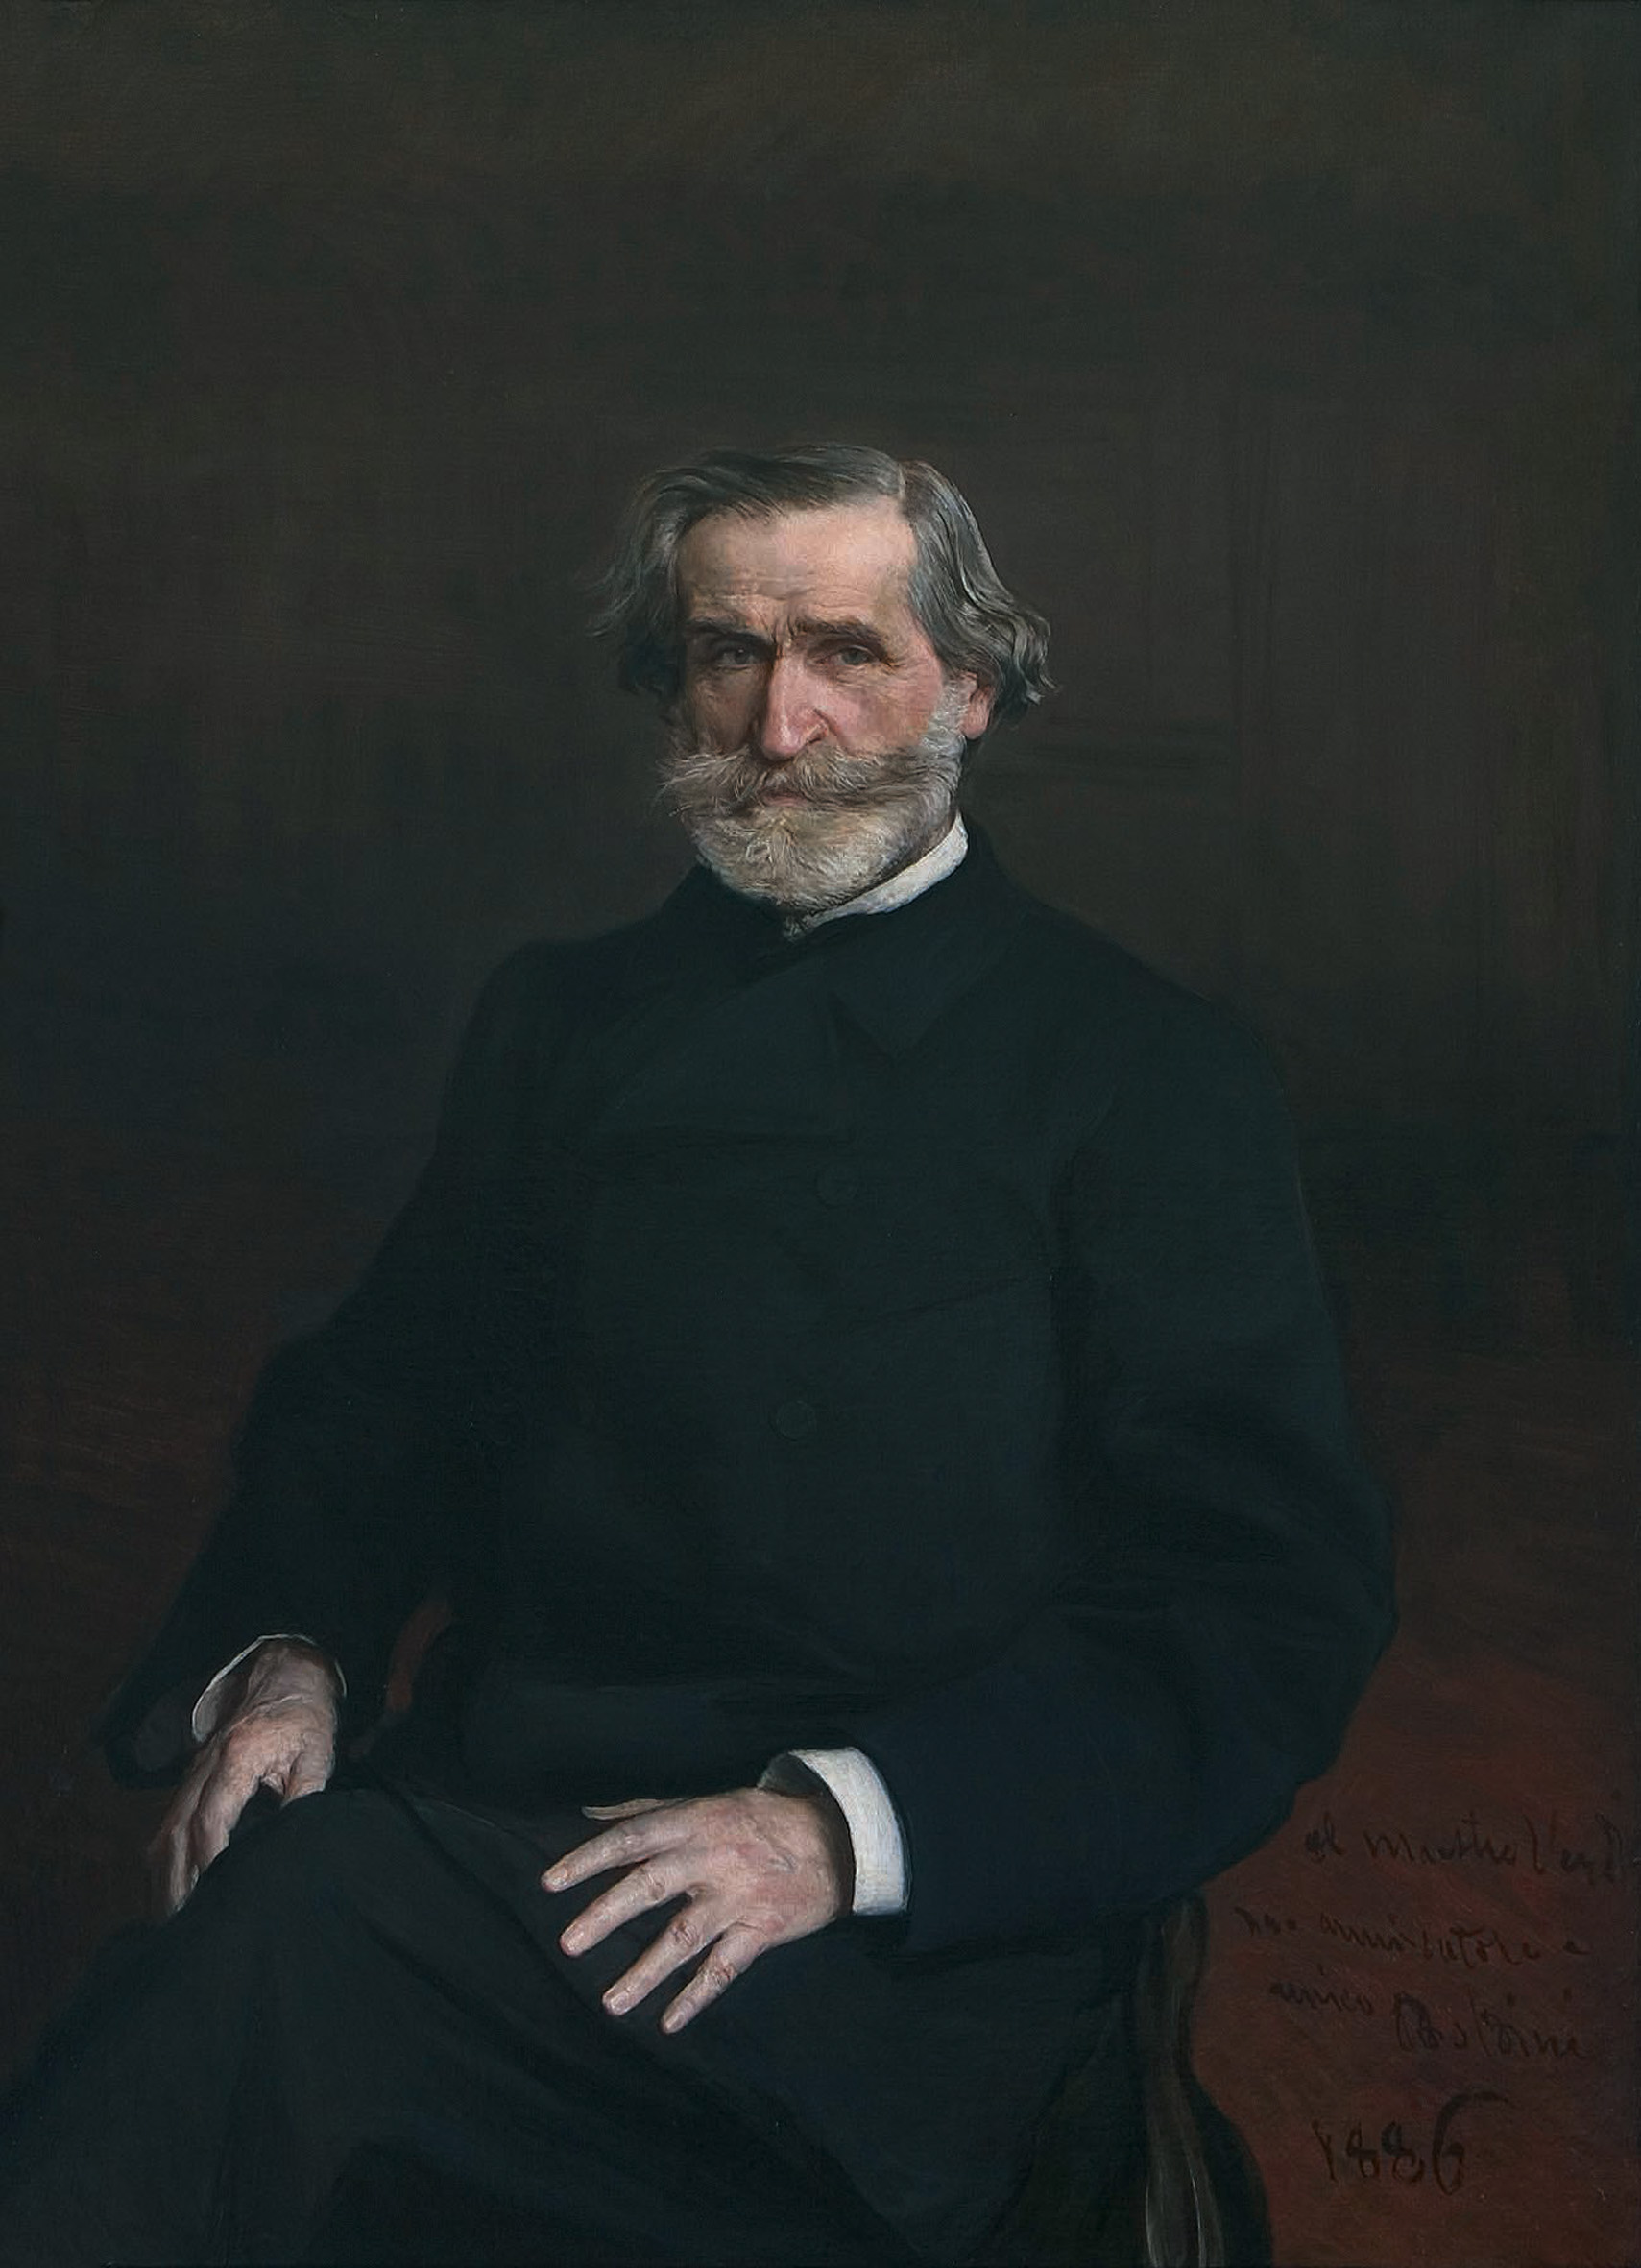  Biografi Giuseppe Verdi